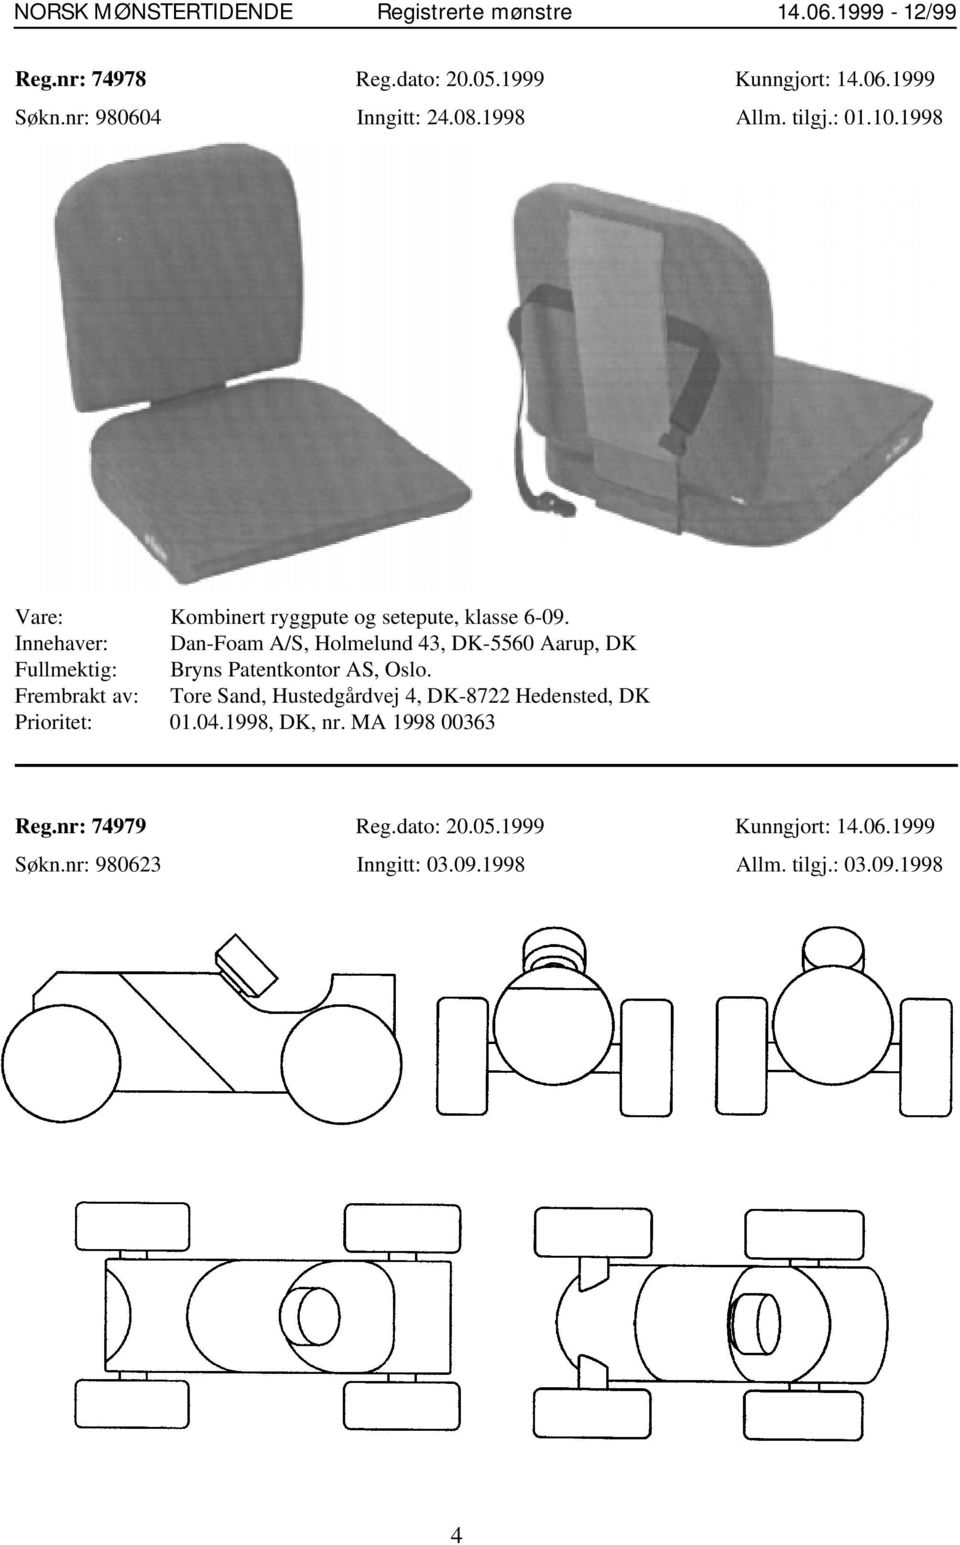 Innehaver: Dan-Foam A/S, Holmelund 43, DK-5560 Aarup, DK Fullmektig: Bryns Patentkontor AS, Oslo.